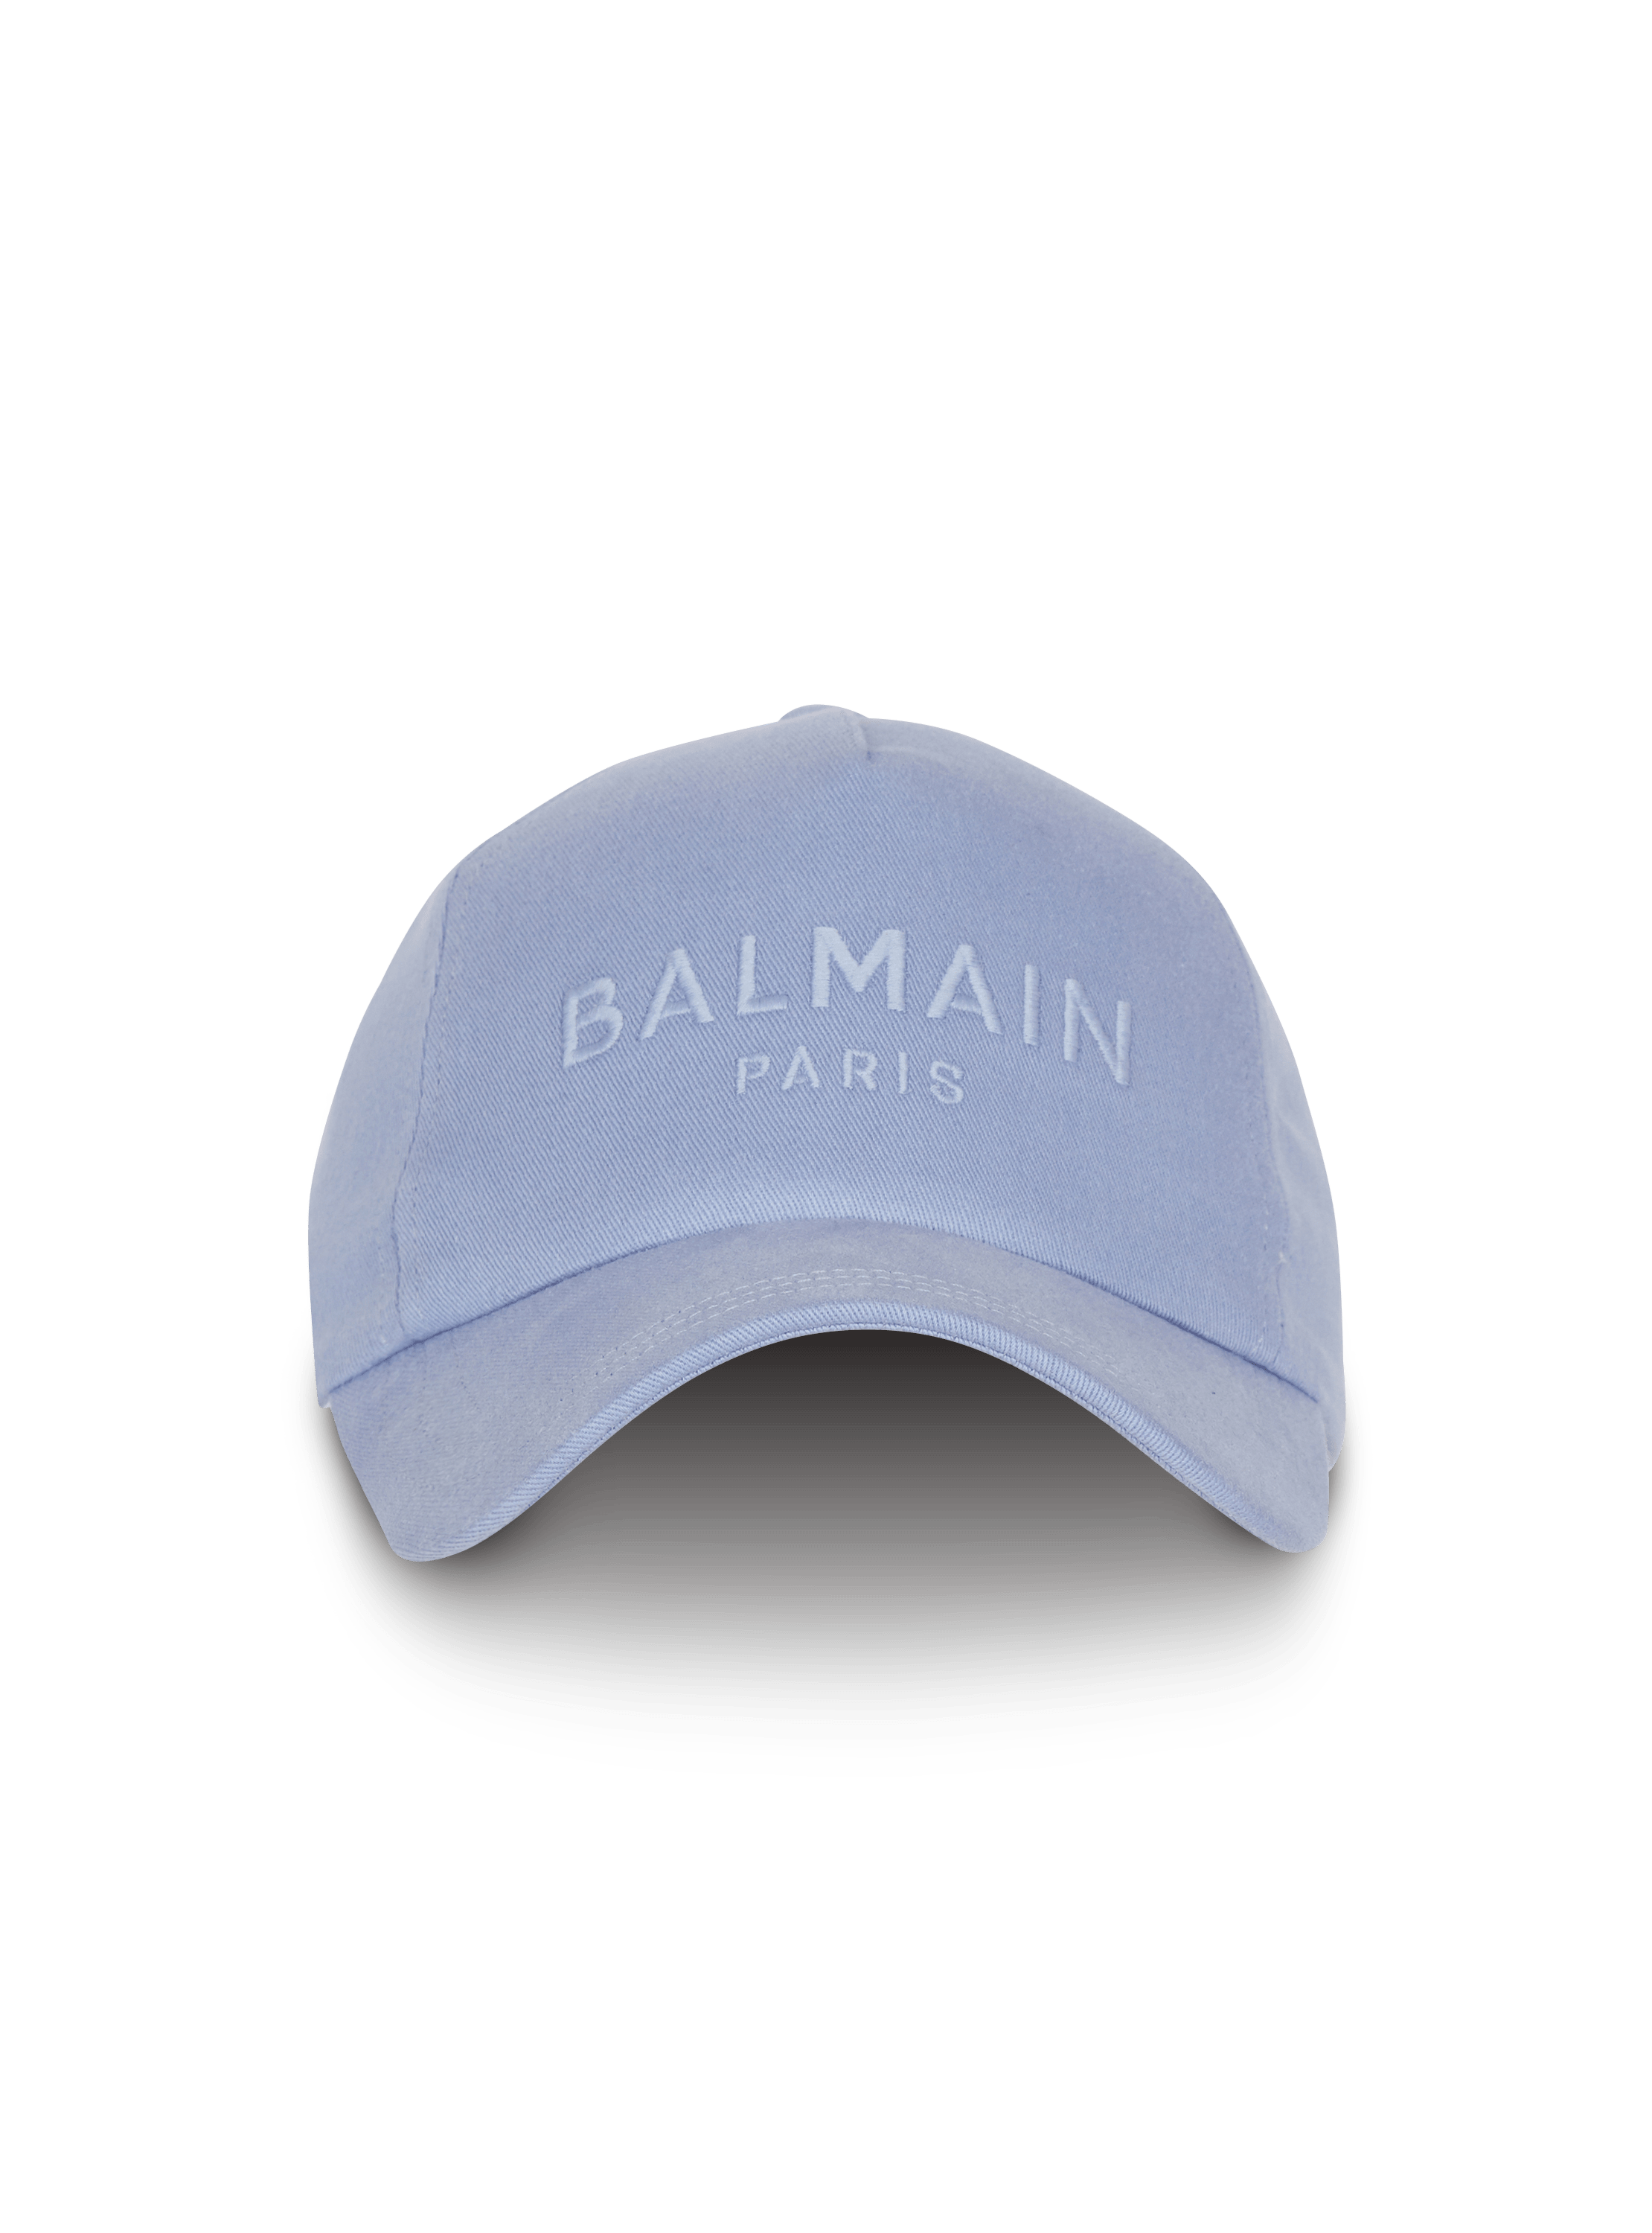 Embroidered Balmain Paris cap blue - Men | BALMAIN